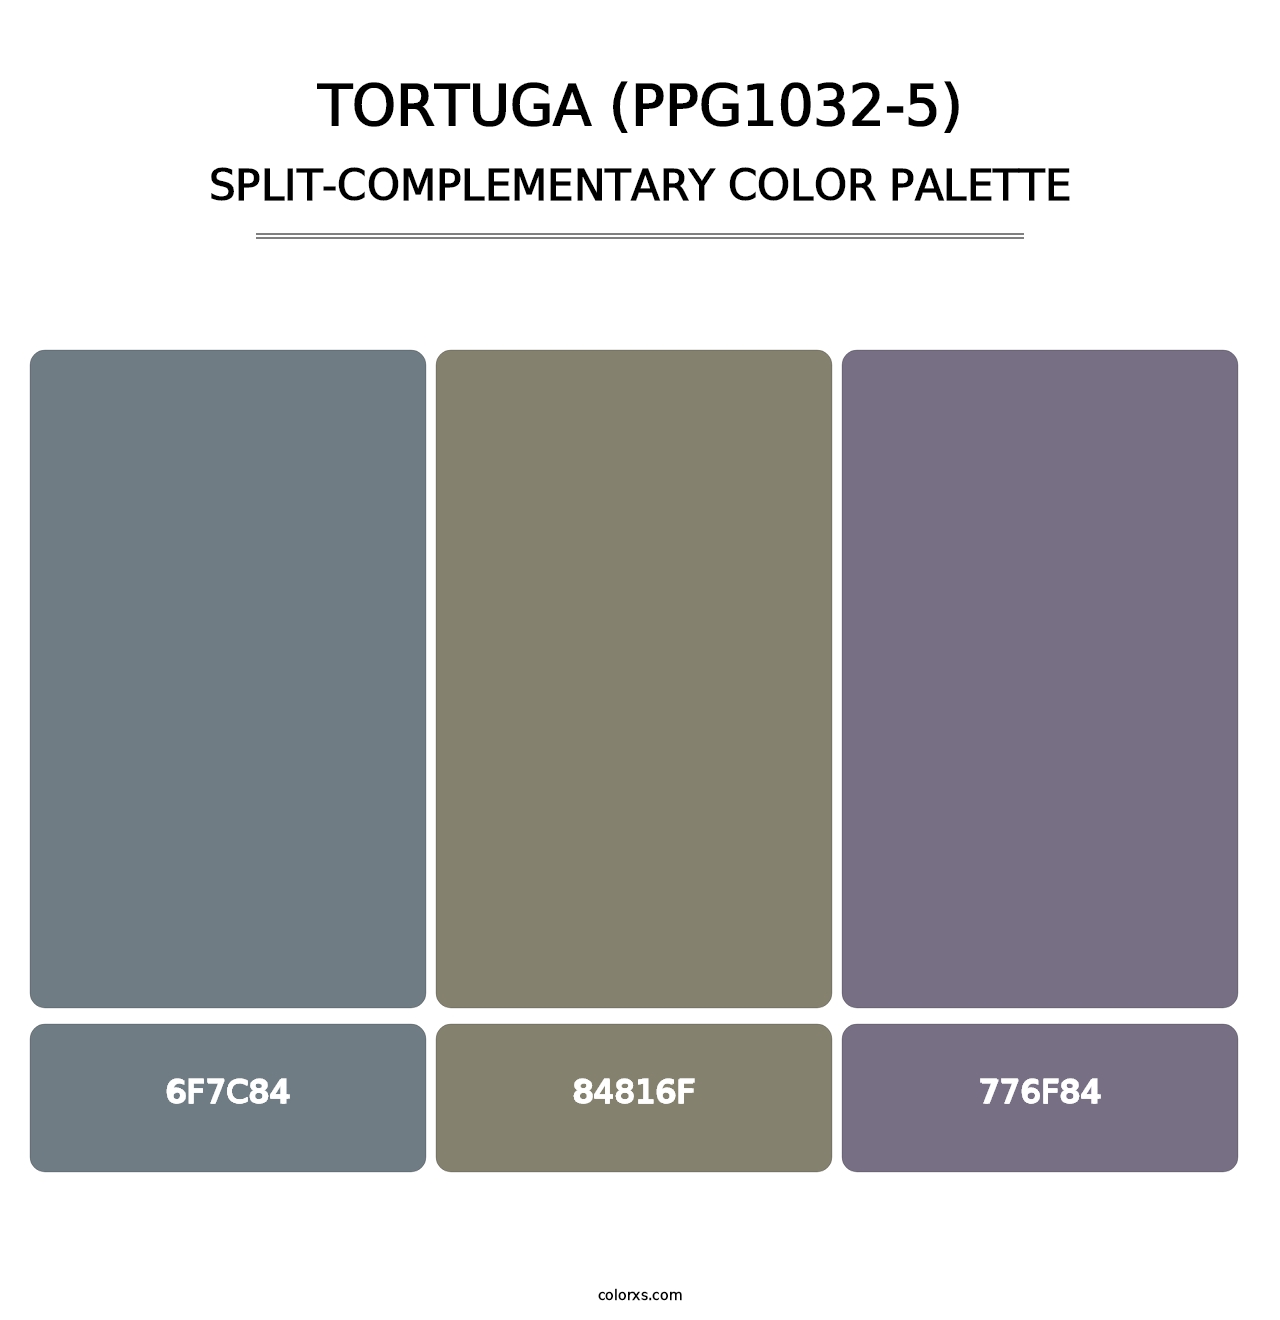 Tortuga (PPG1032-5) - Split-Complementary Color Palette